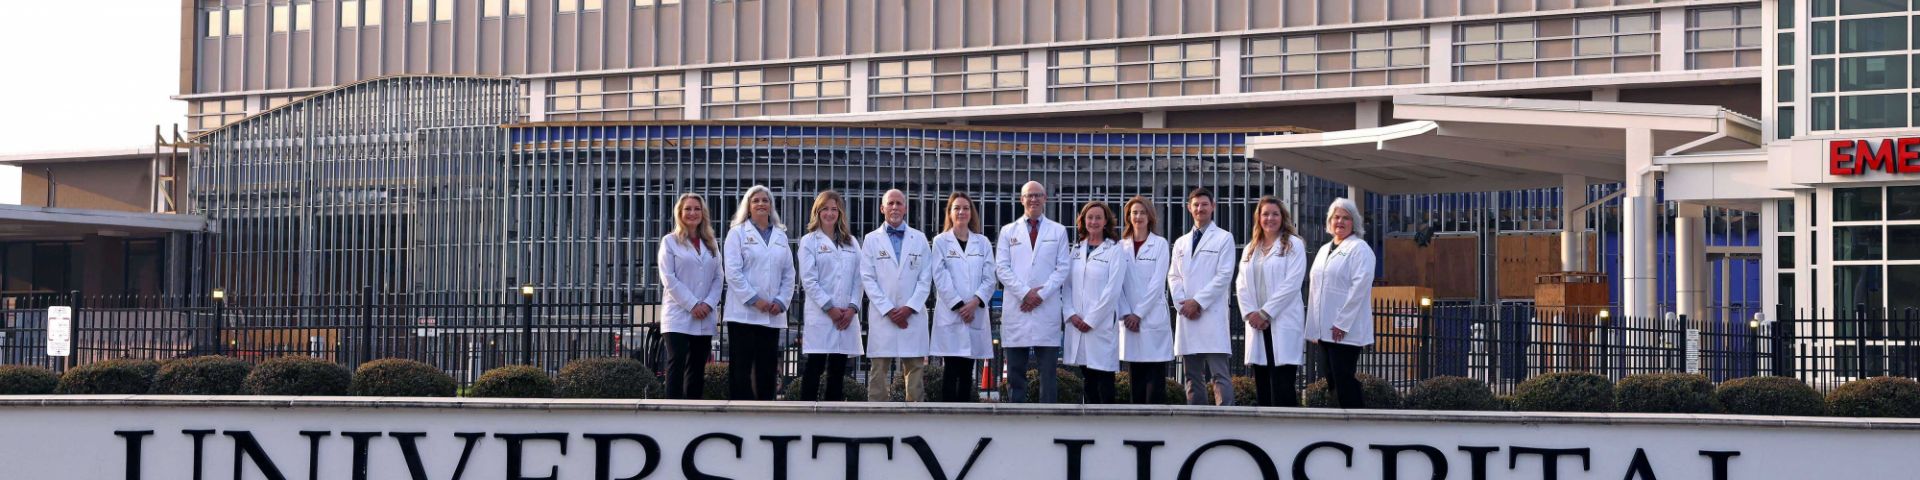 USA Health launches urology residency program